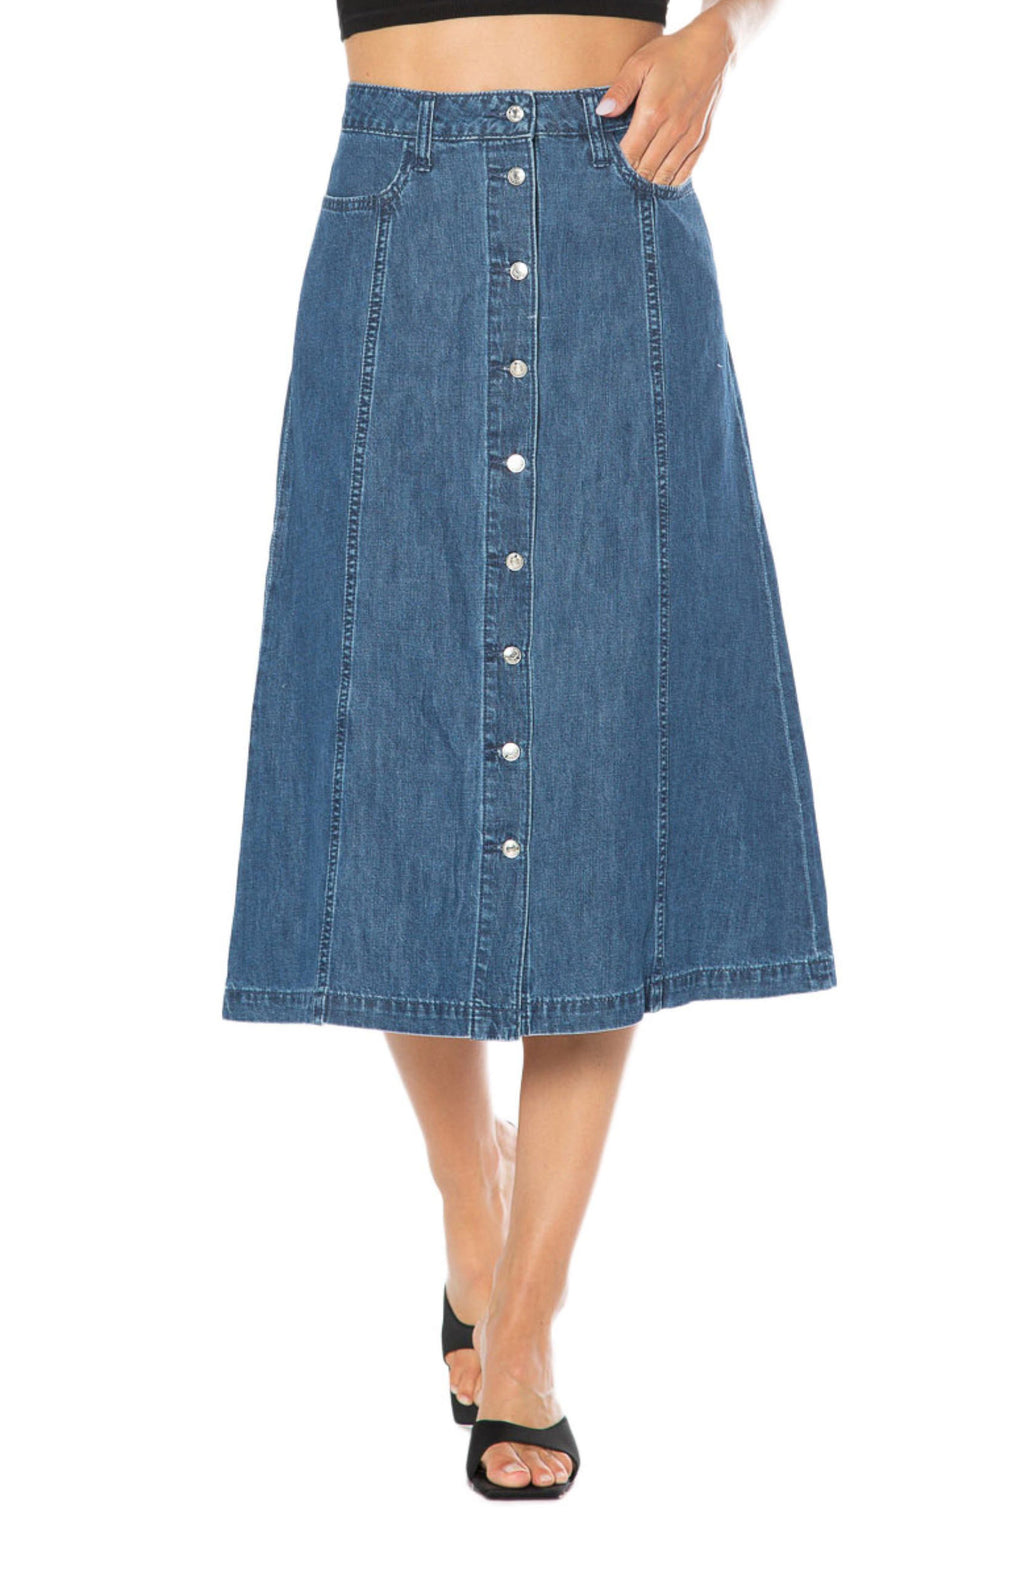 JUICY COUTURE Denim A-Line Skirt, Main, color, MEDIUM WASH